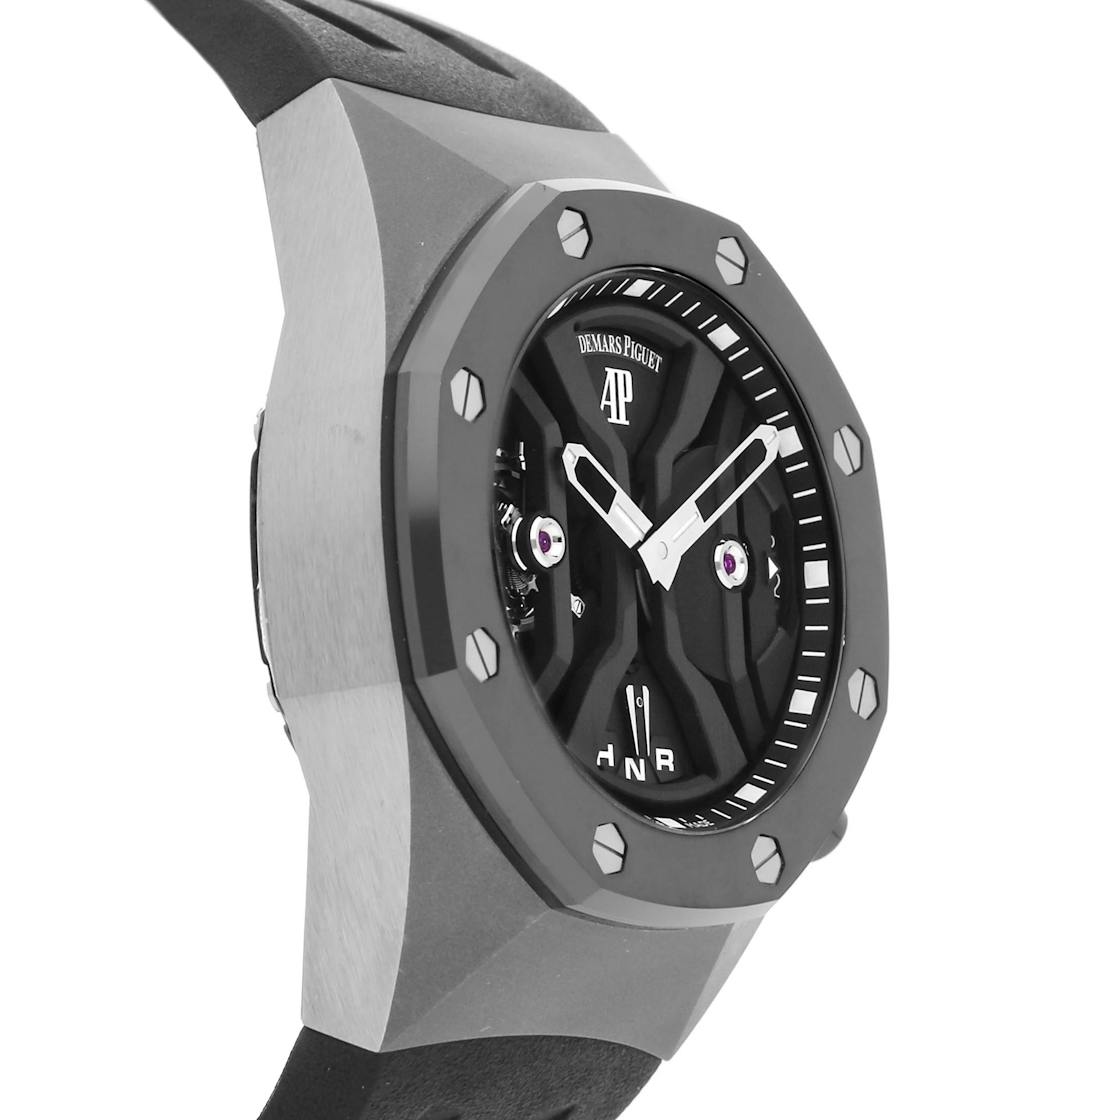 Audemars Piguet Men's Royal Oak Concept GMT Tourbillon Watch in Black/Skeleton, Titanium, Manual Wind | Govberg 26560IO.OO.D002CA.01